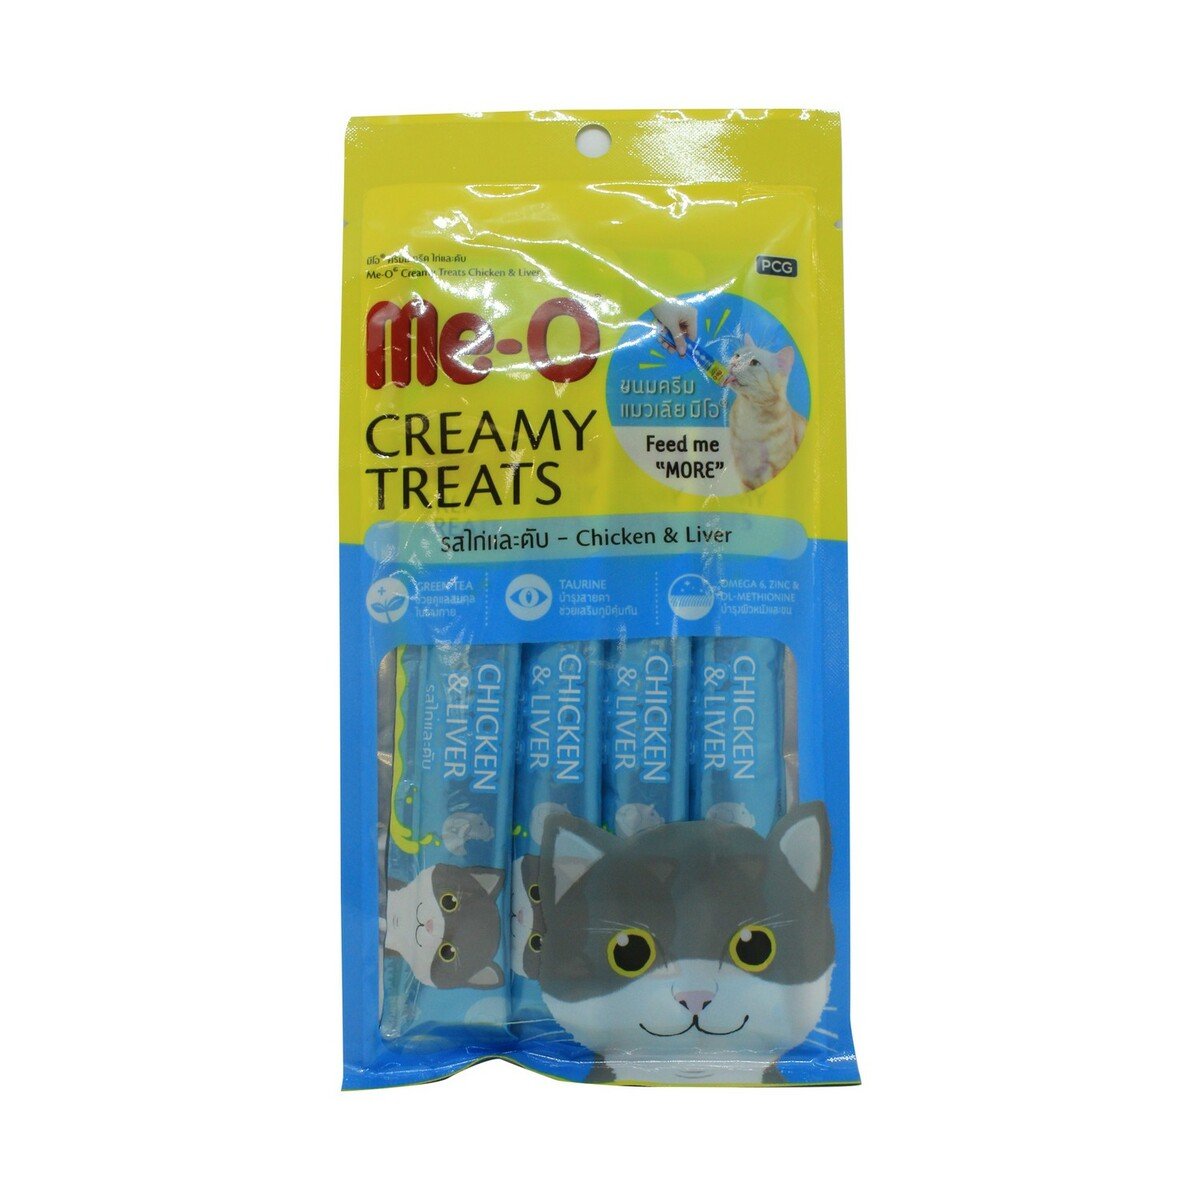 Me-O Creamy Treats Chicken & Liver Flavor 4 x 15g